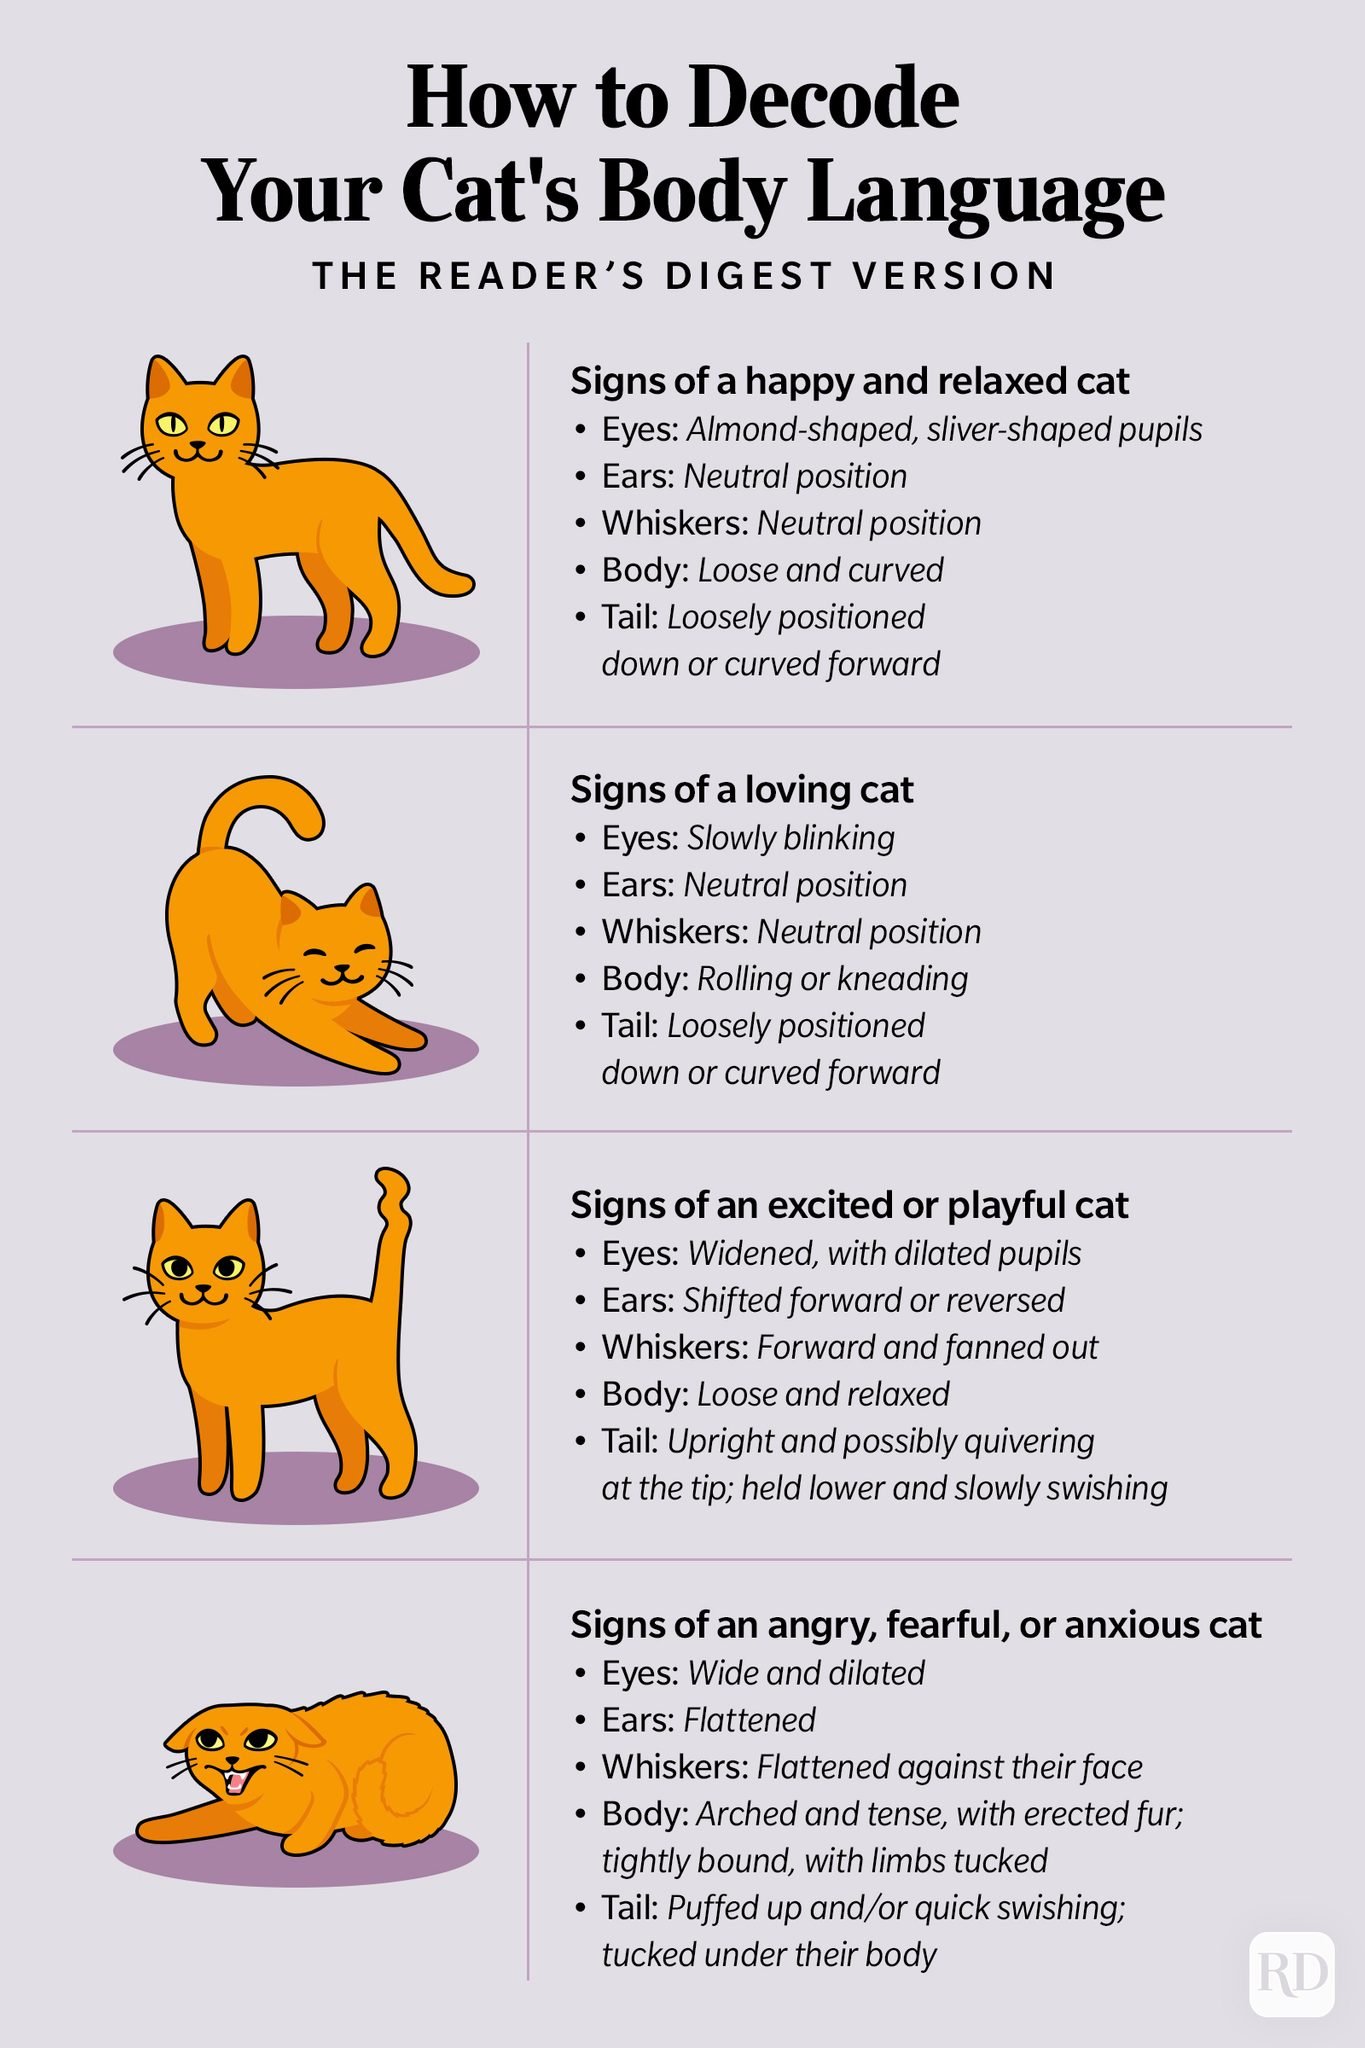 Cat Body Language: How to Decode Your Cat's Body Language